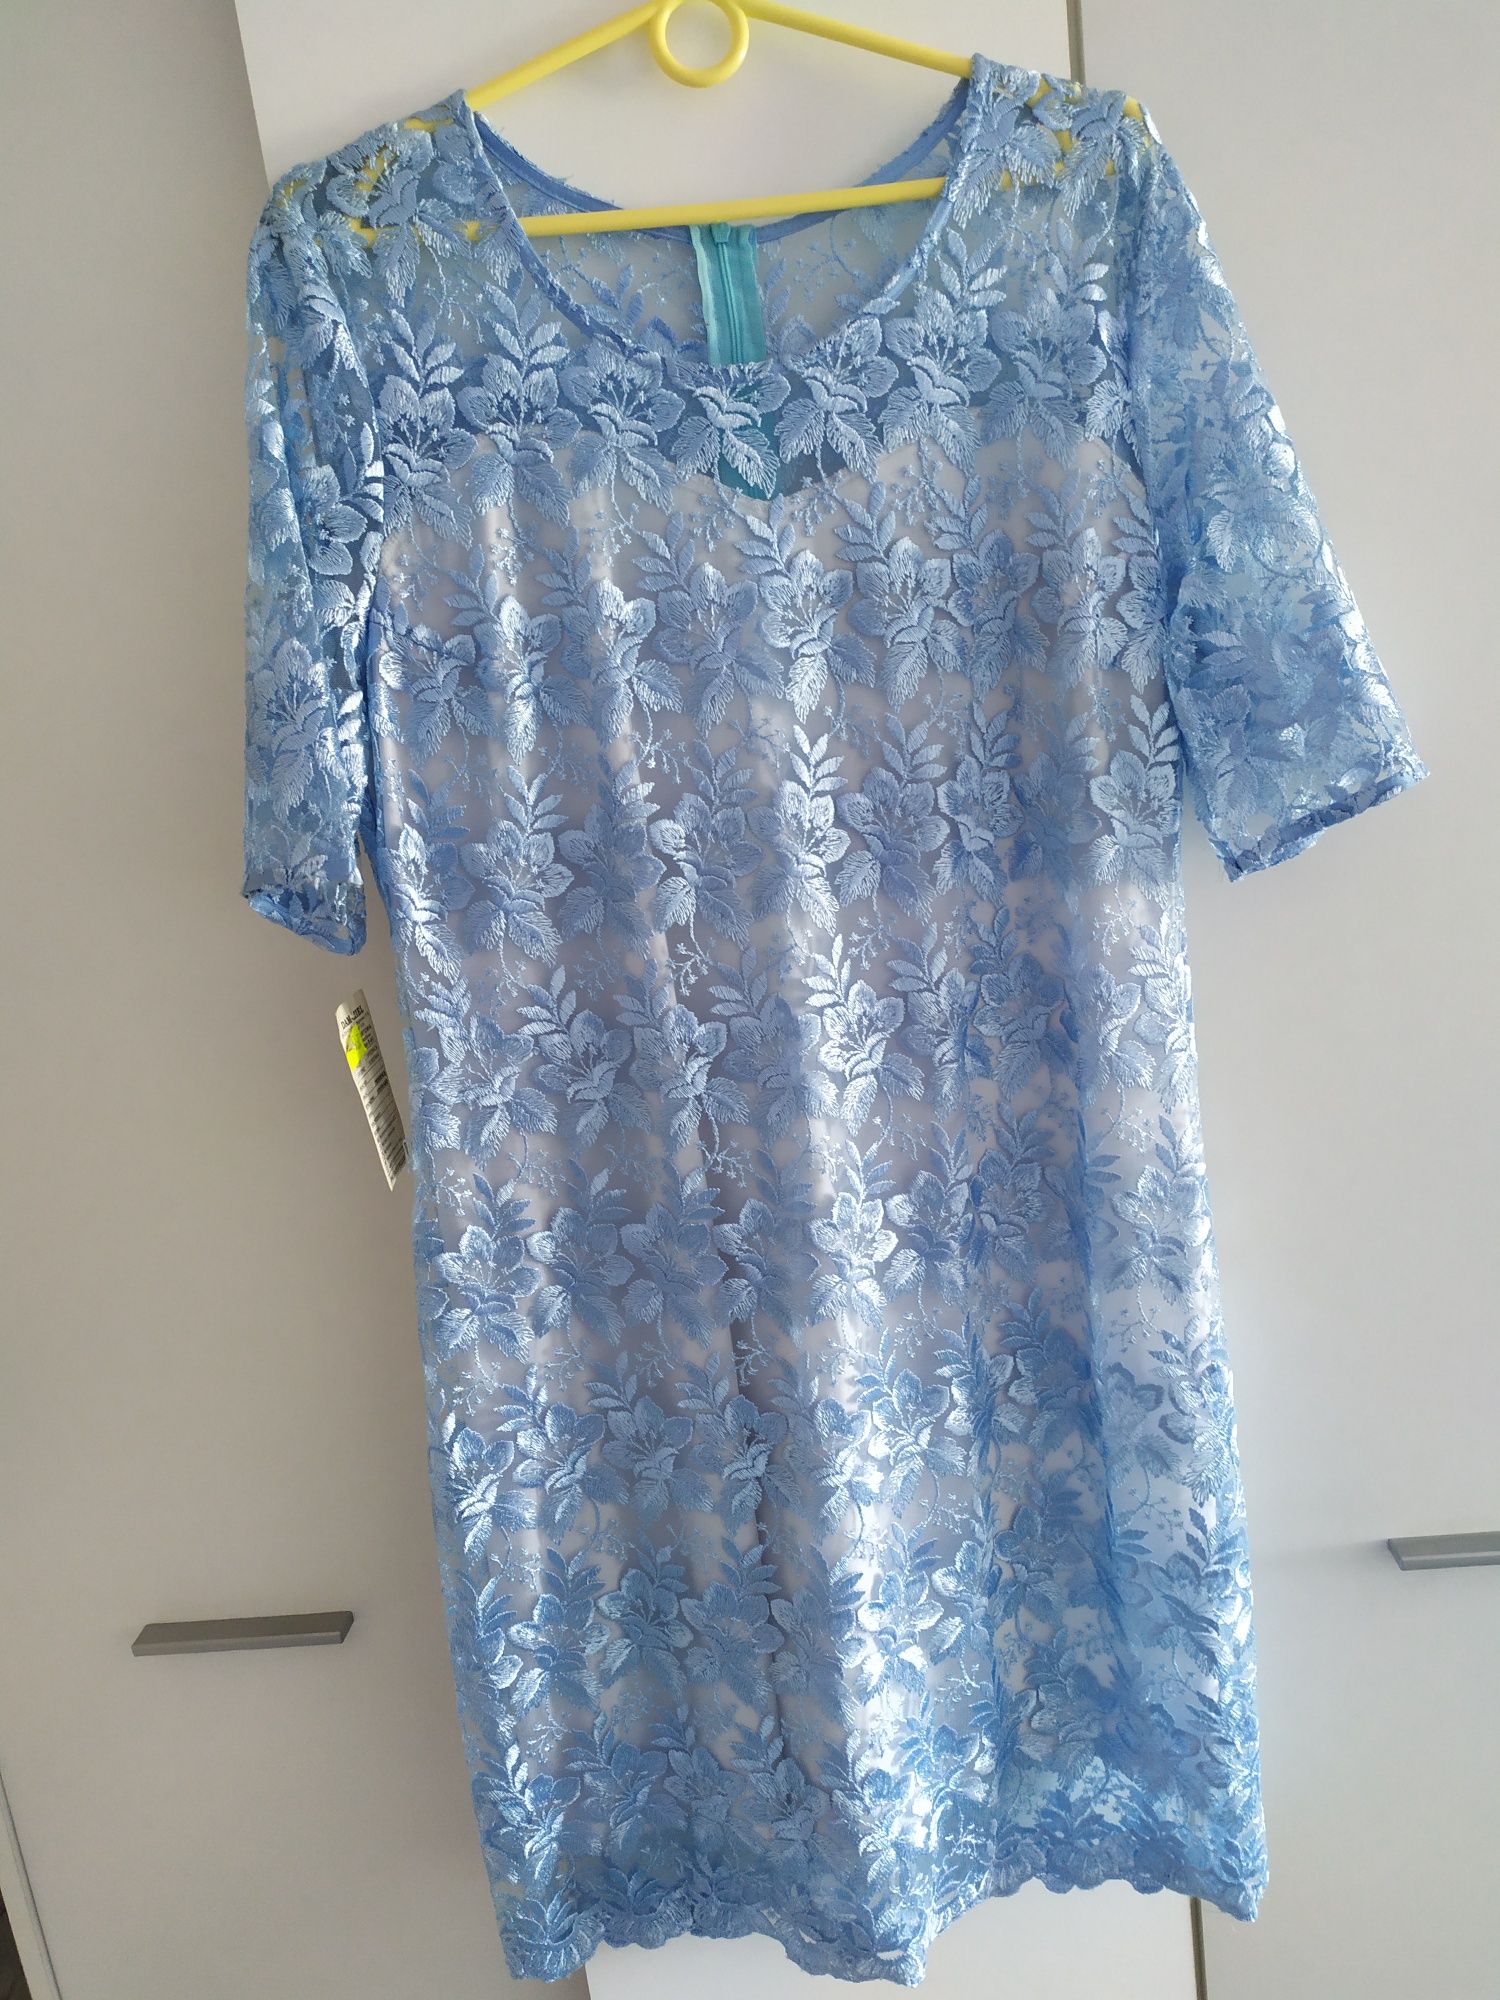 Błękitna sukienka rozmiar 42, nowa z metką